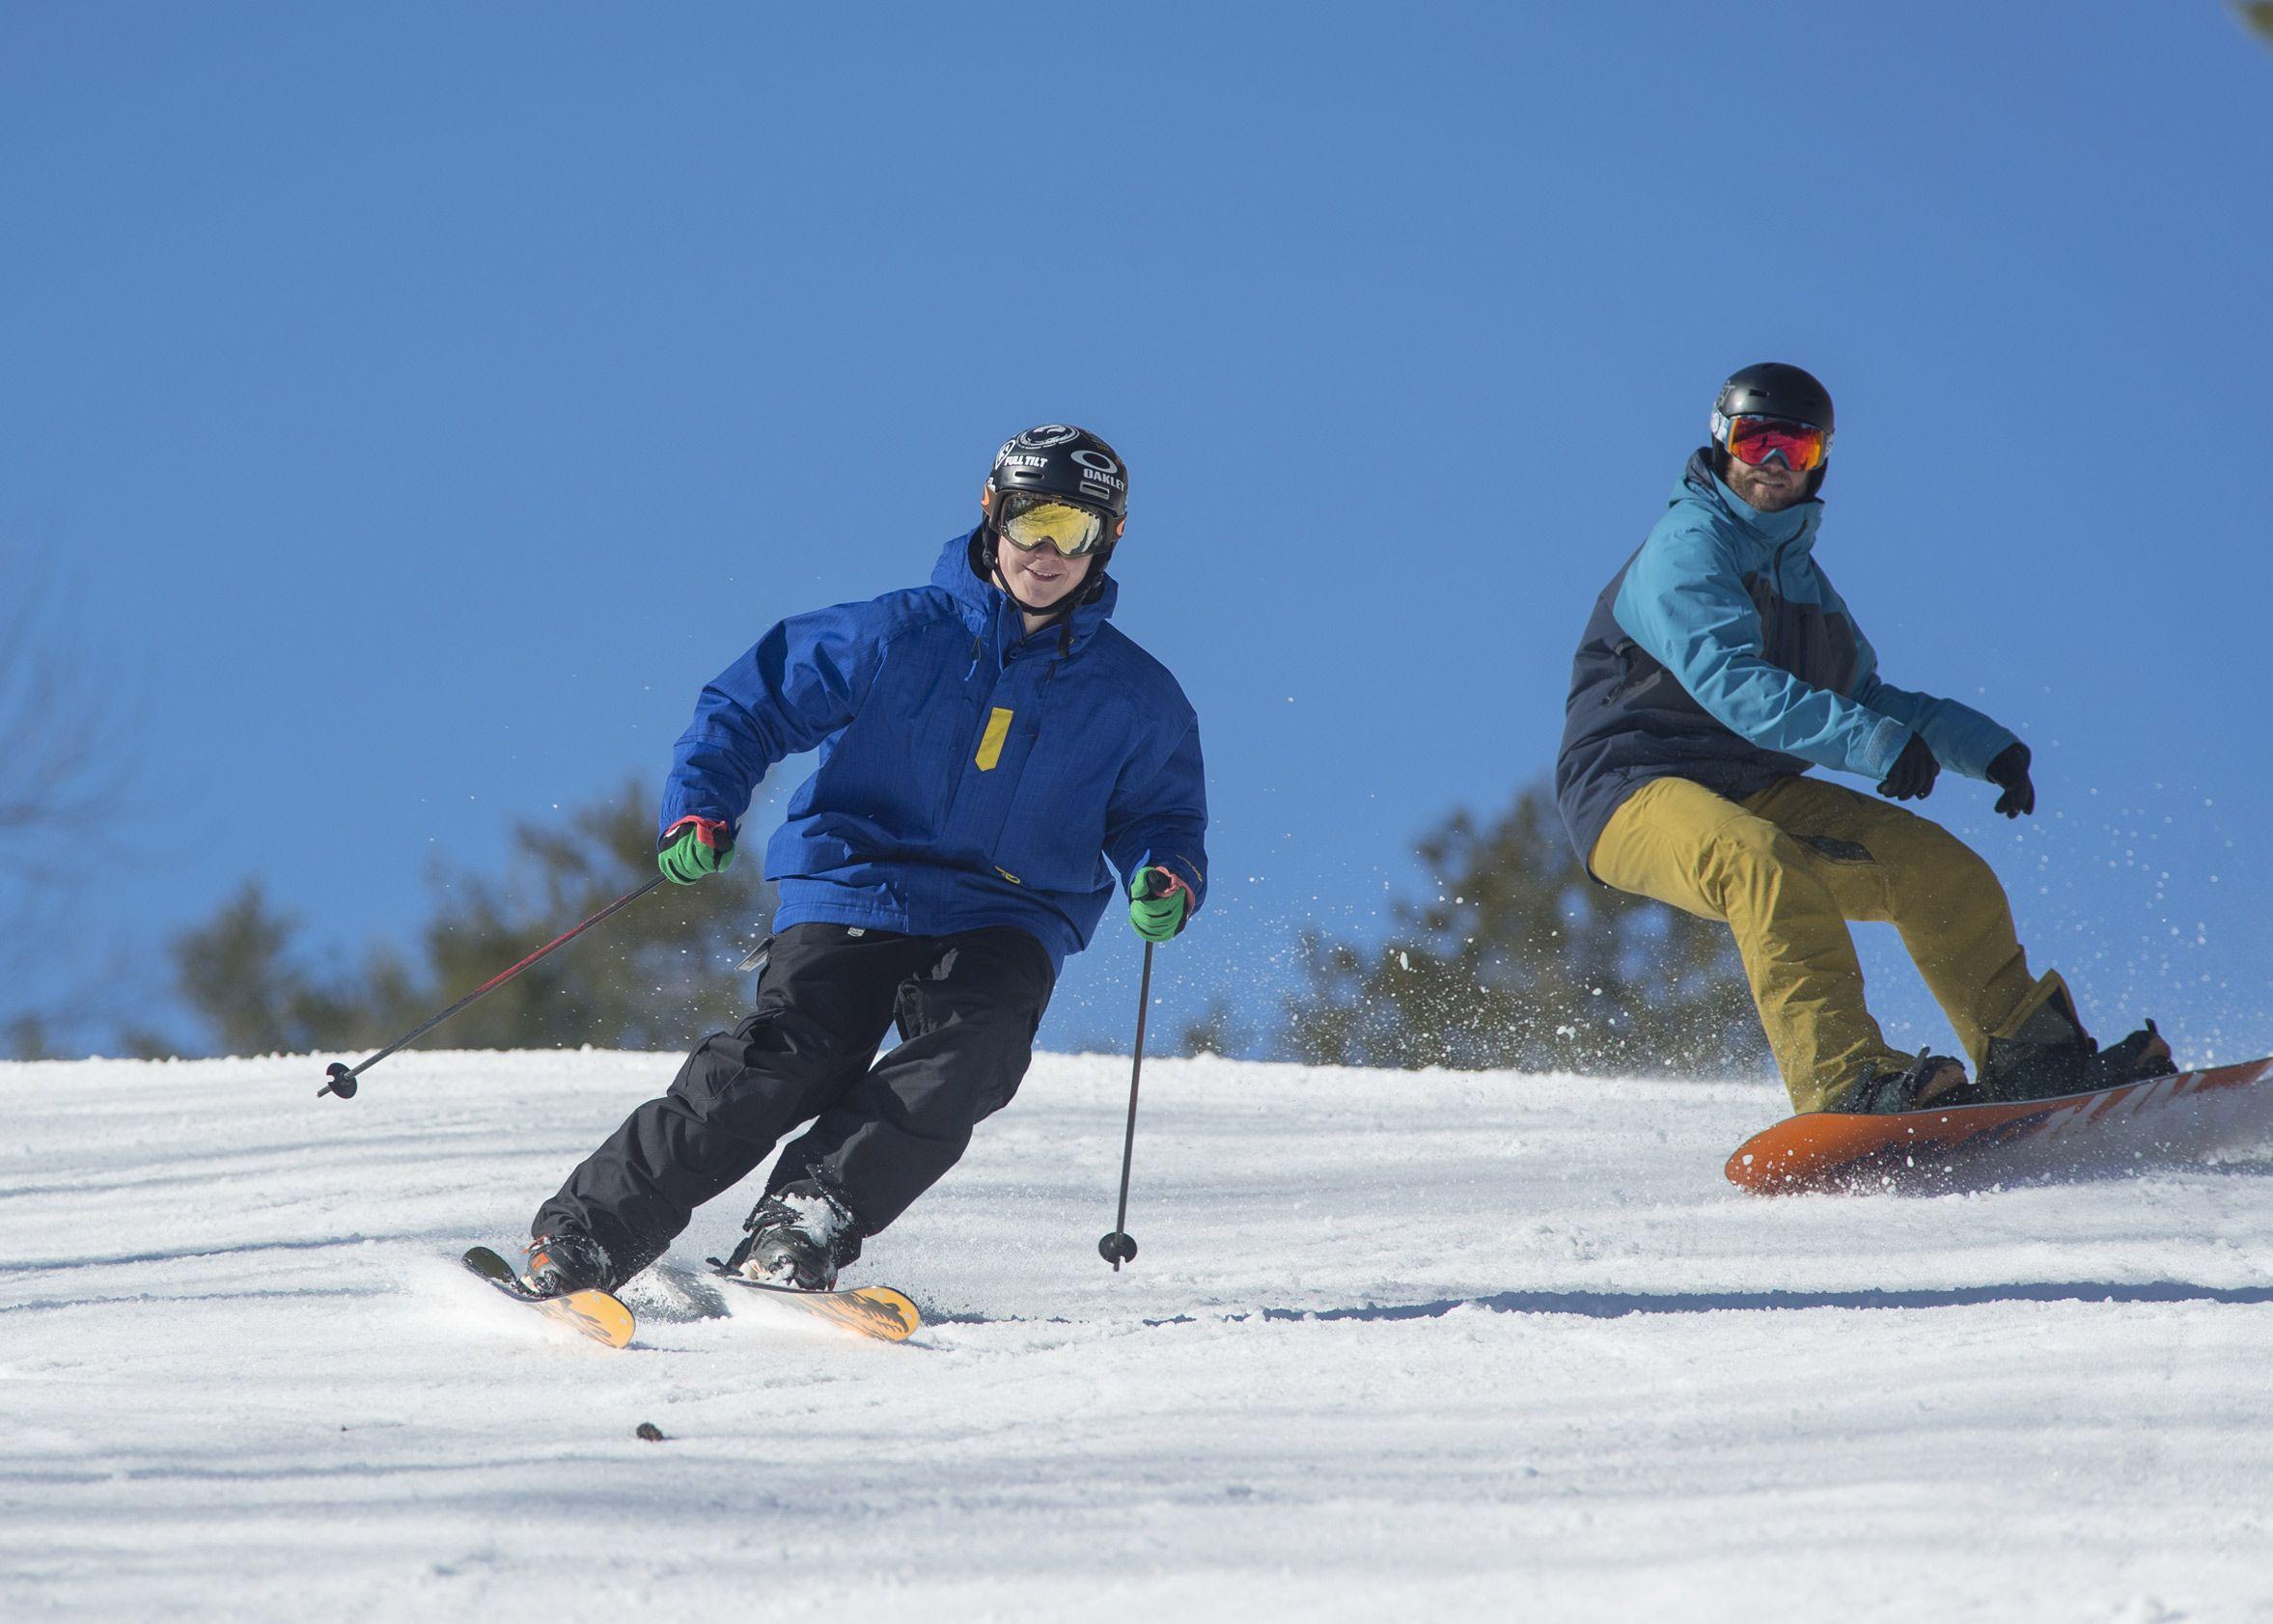 Snow Skier Logo - Pats Peak Peak Ski Area in Henniker, NH is southern New